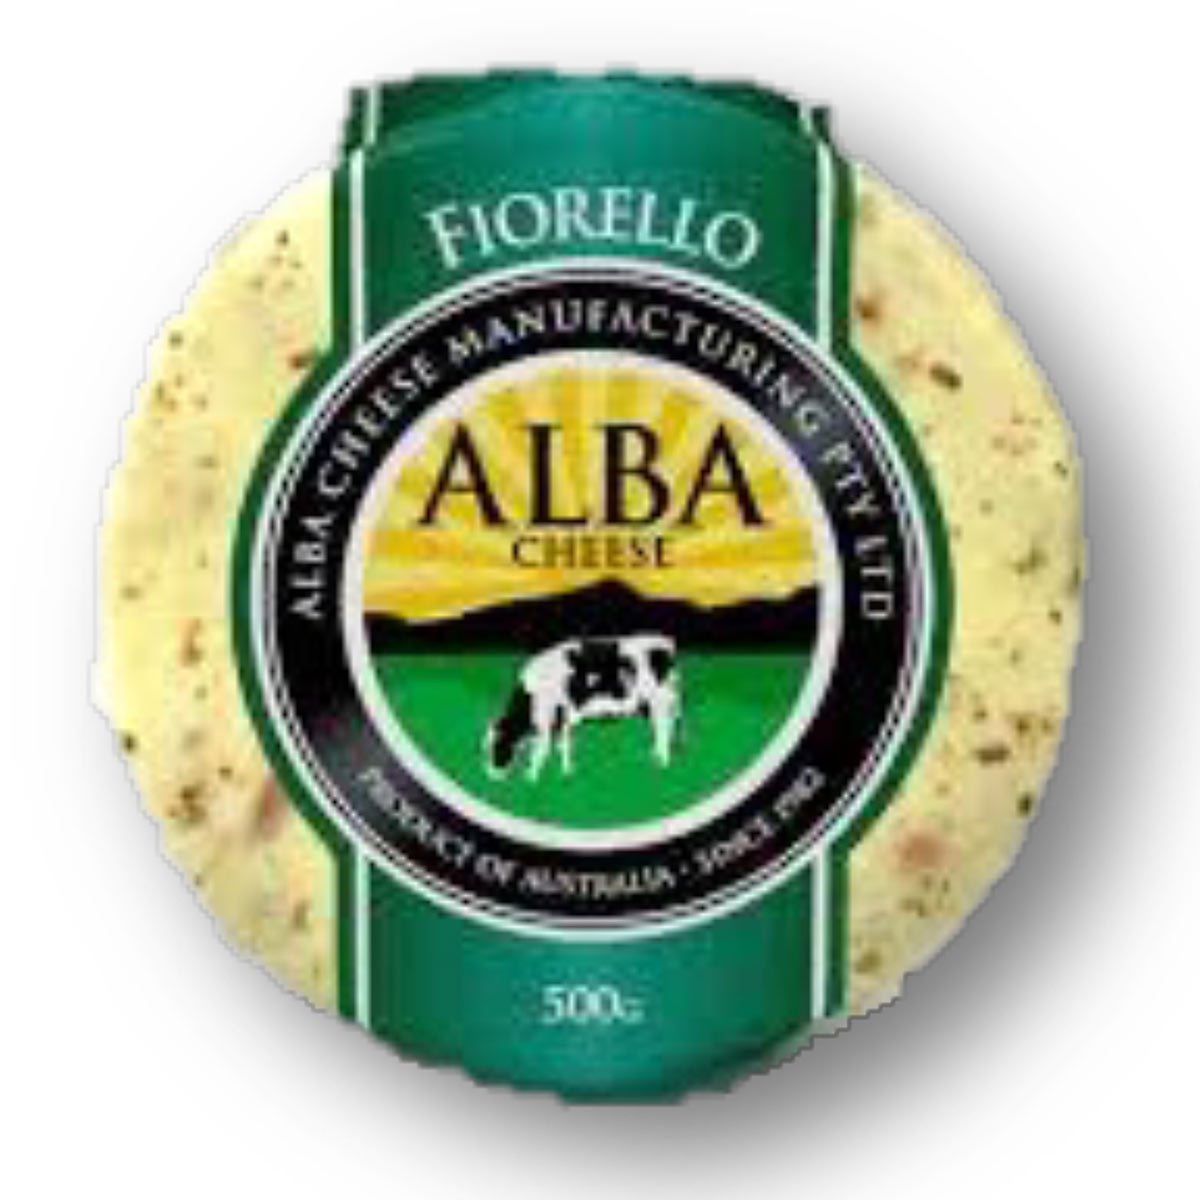 Alba---formaggino-with-herbs-500g.jpg